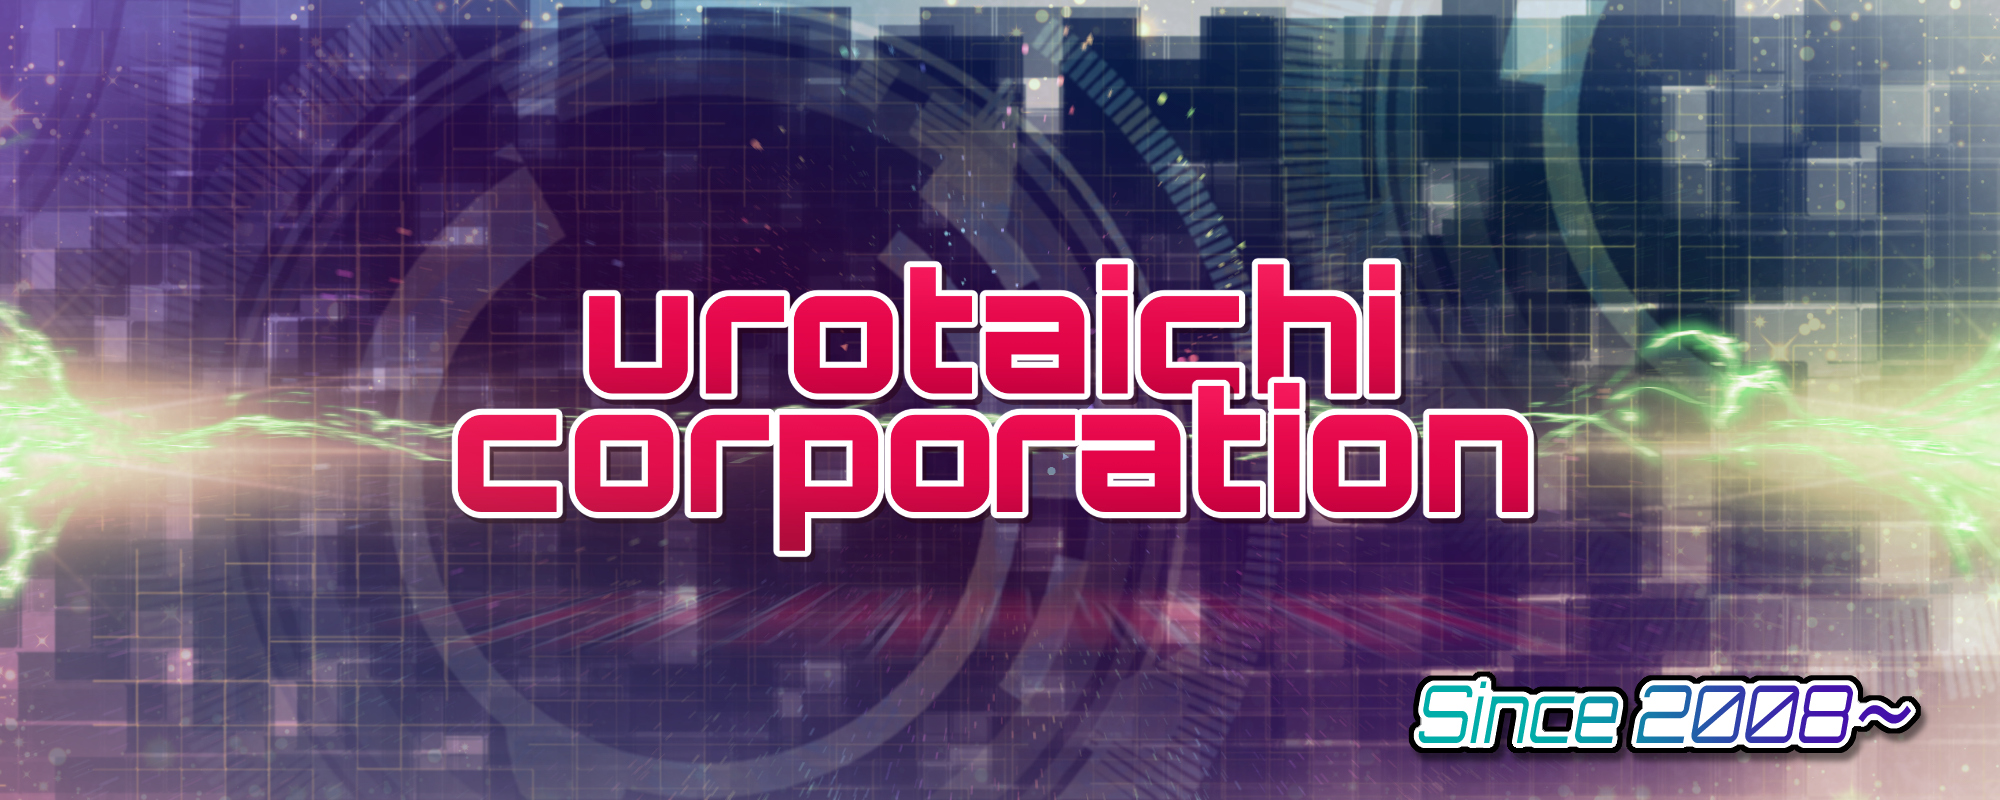 urotaichi corporation　Since 2008